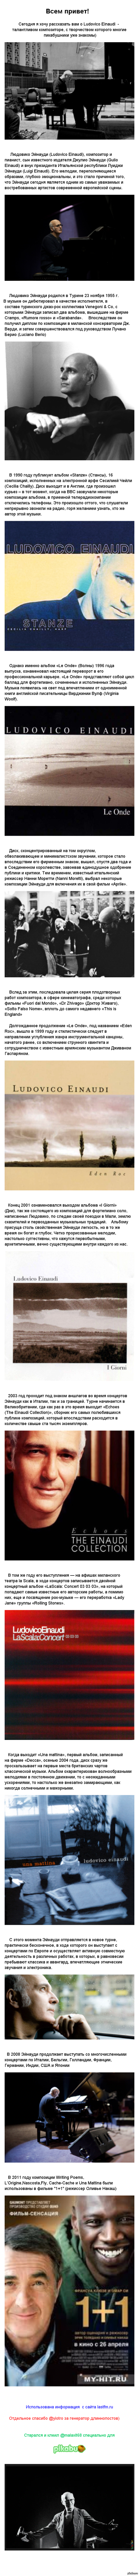 Ludovico Einaudi - Ddinludovico Einaudi, Biography, Composer, Musicians, Pianists, Talent, Longpost